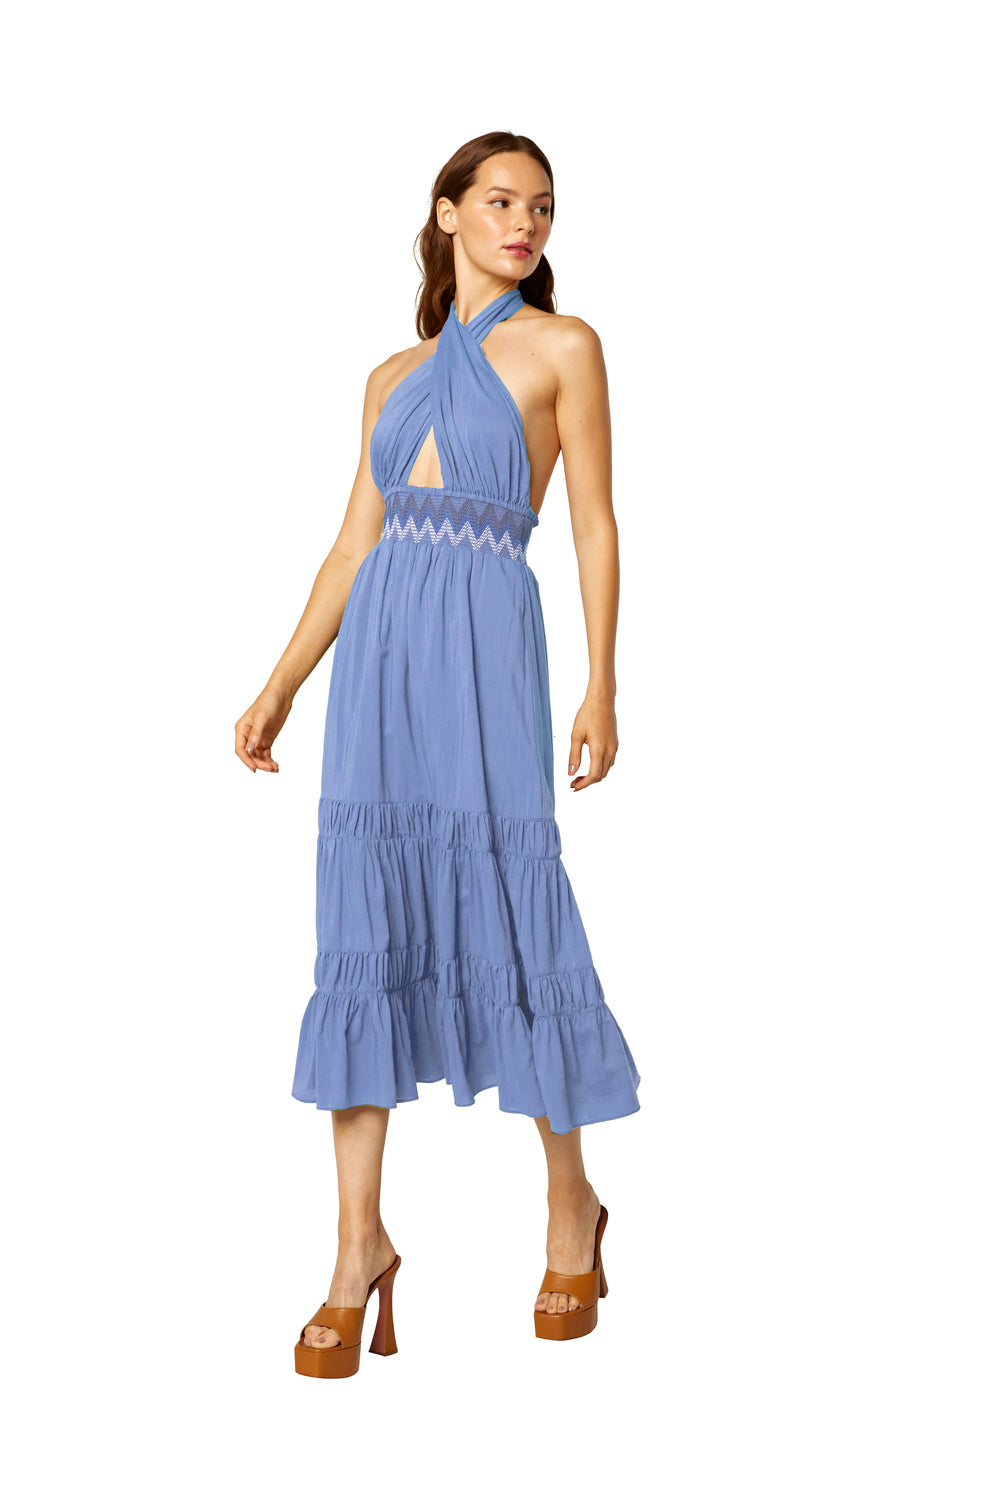 Misa - Karolina Dress in Blue